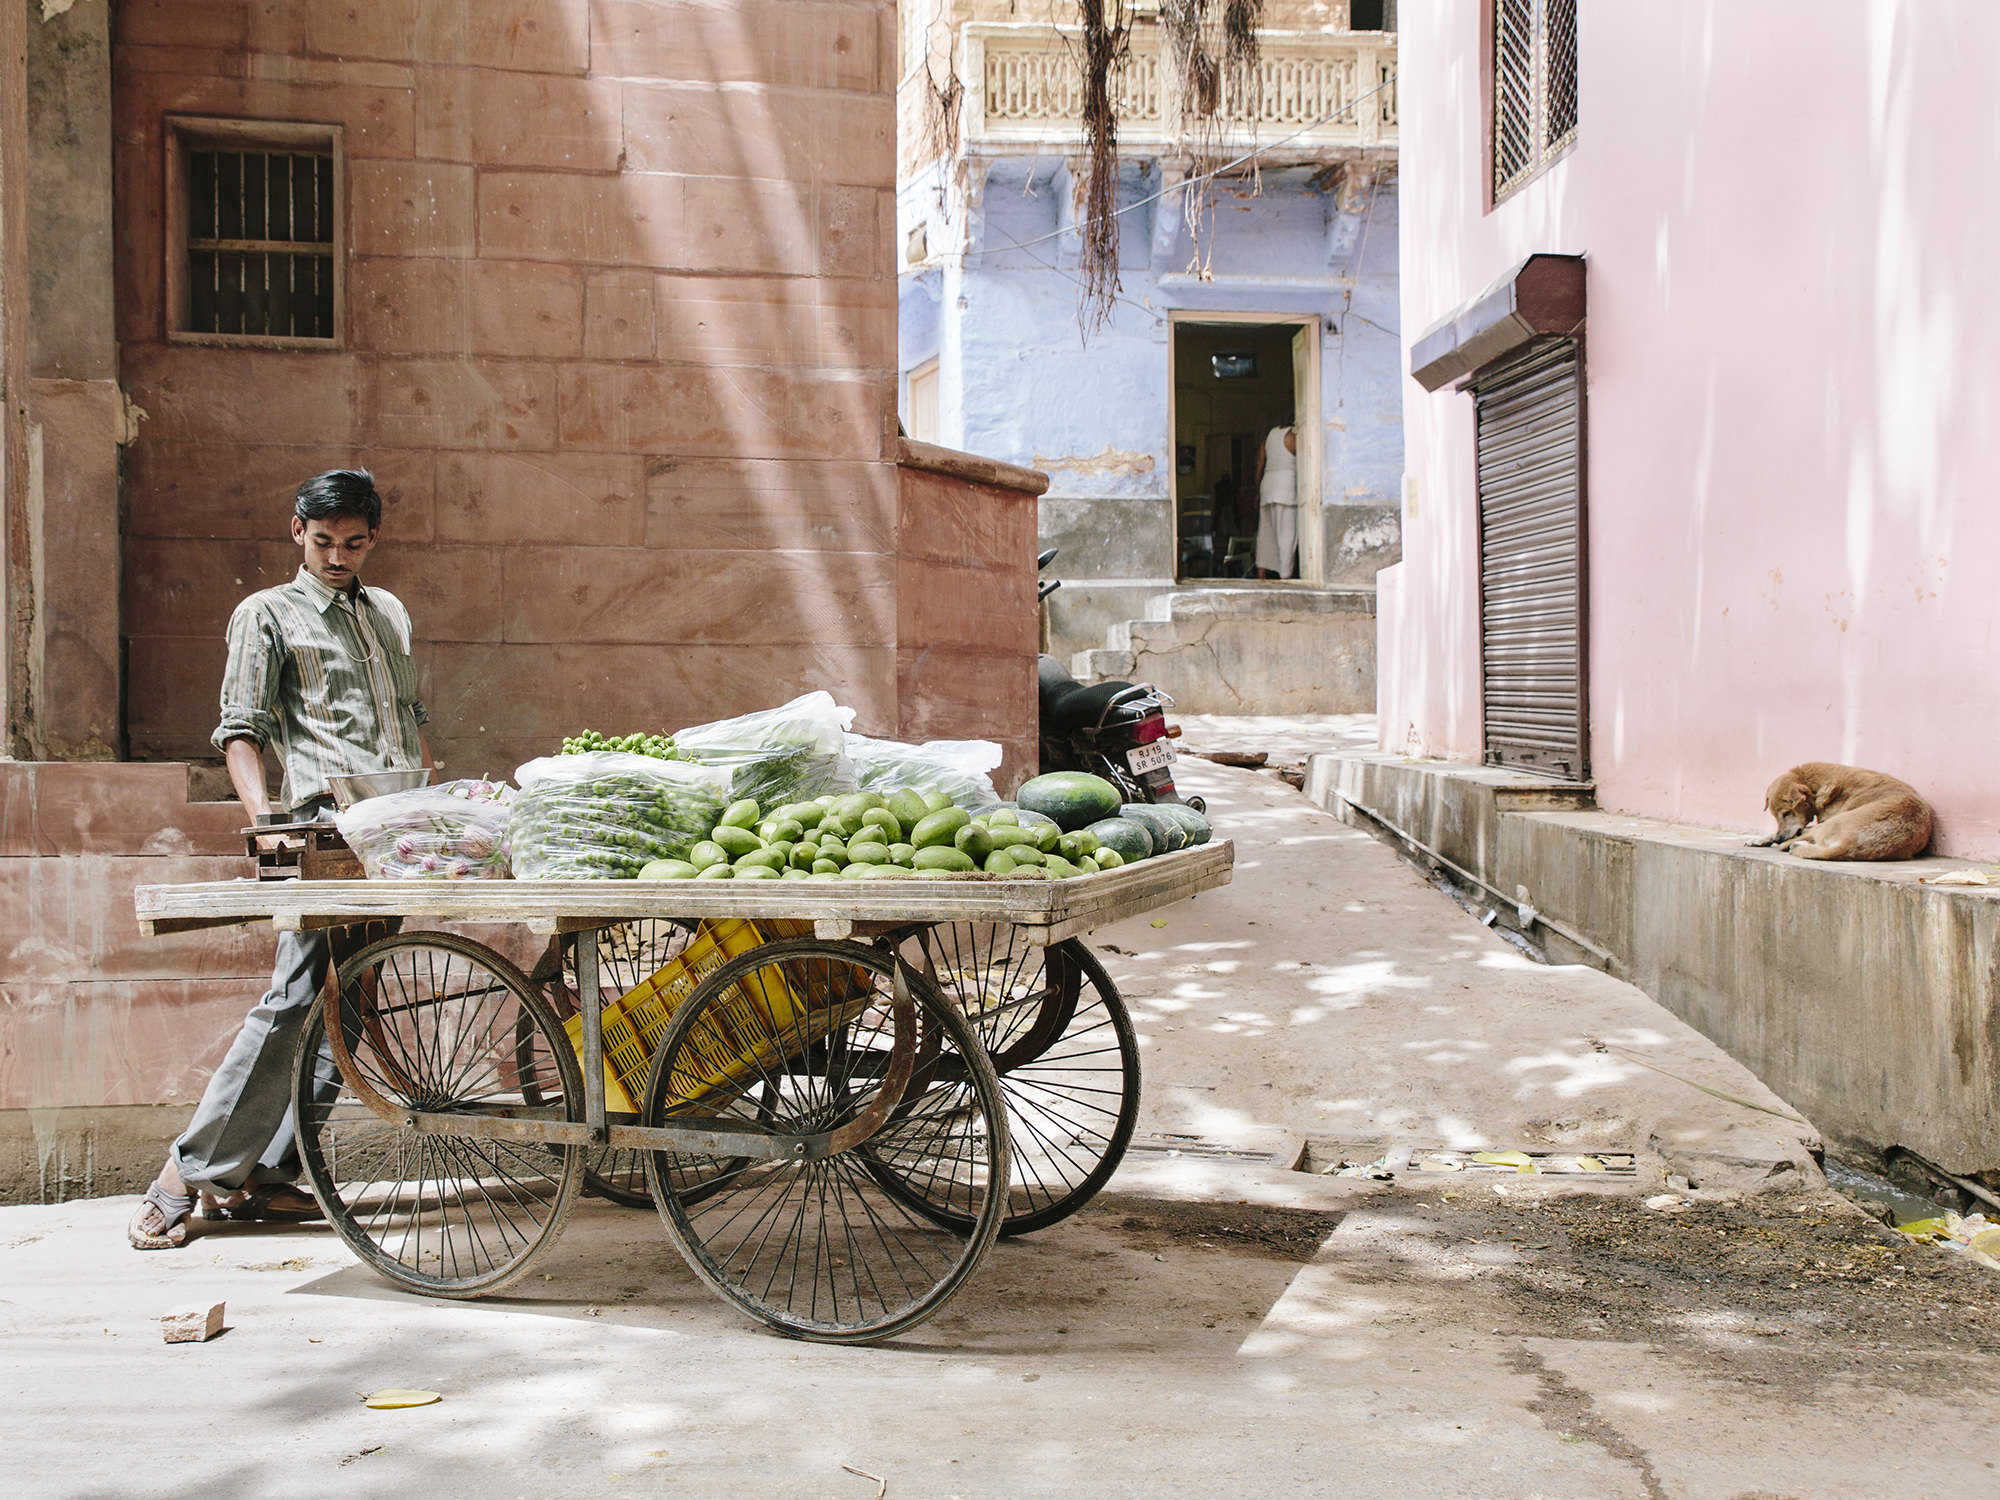 Vegetable vendor,Jodhpur, India. 2017.